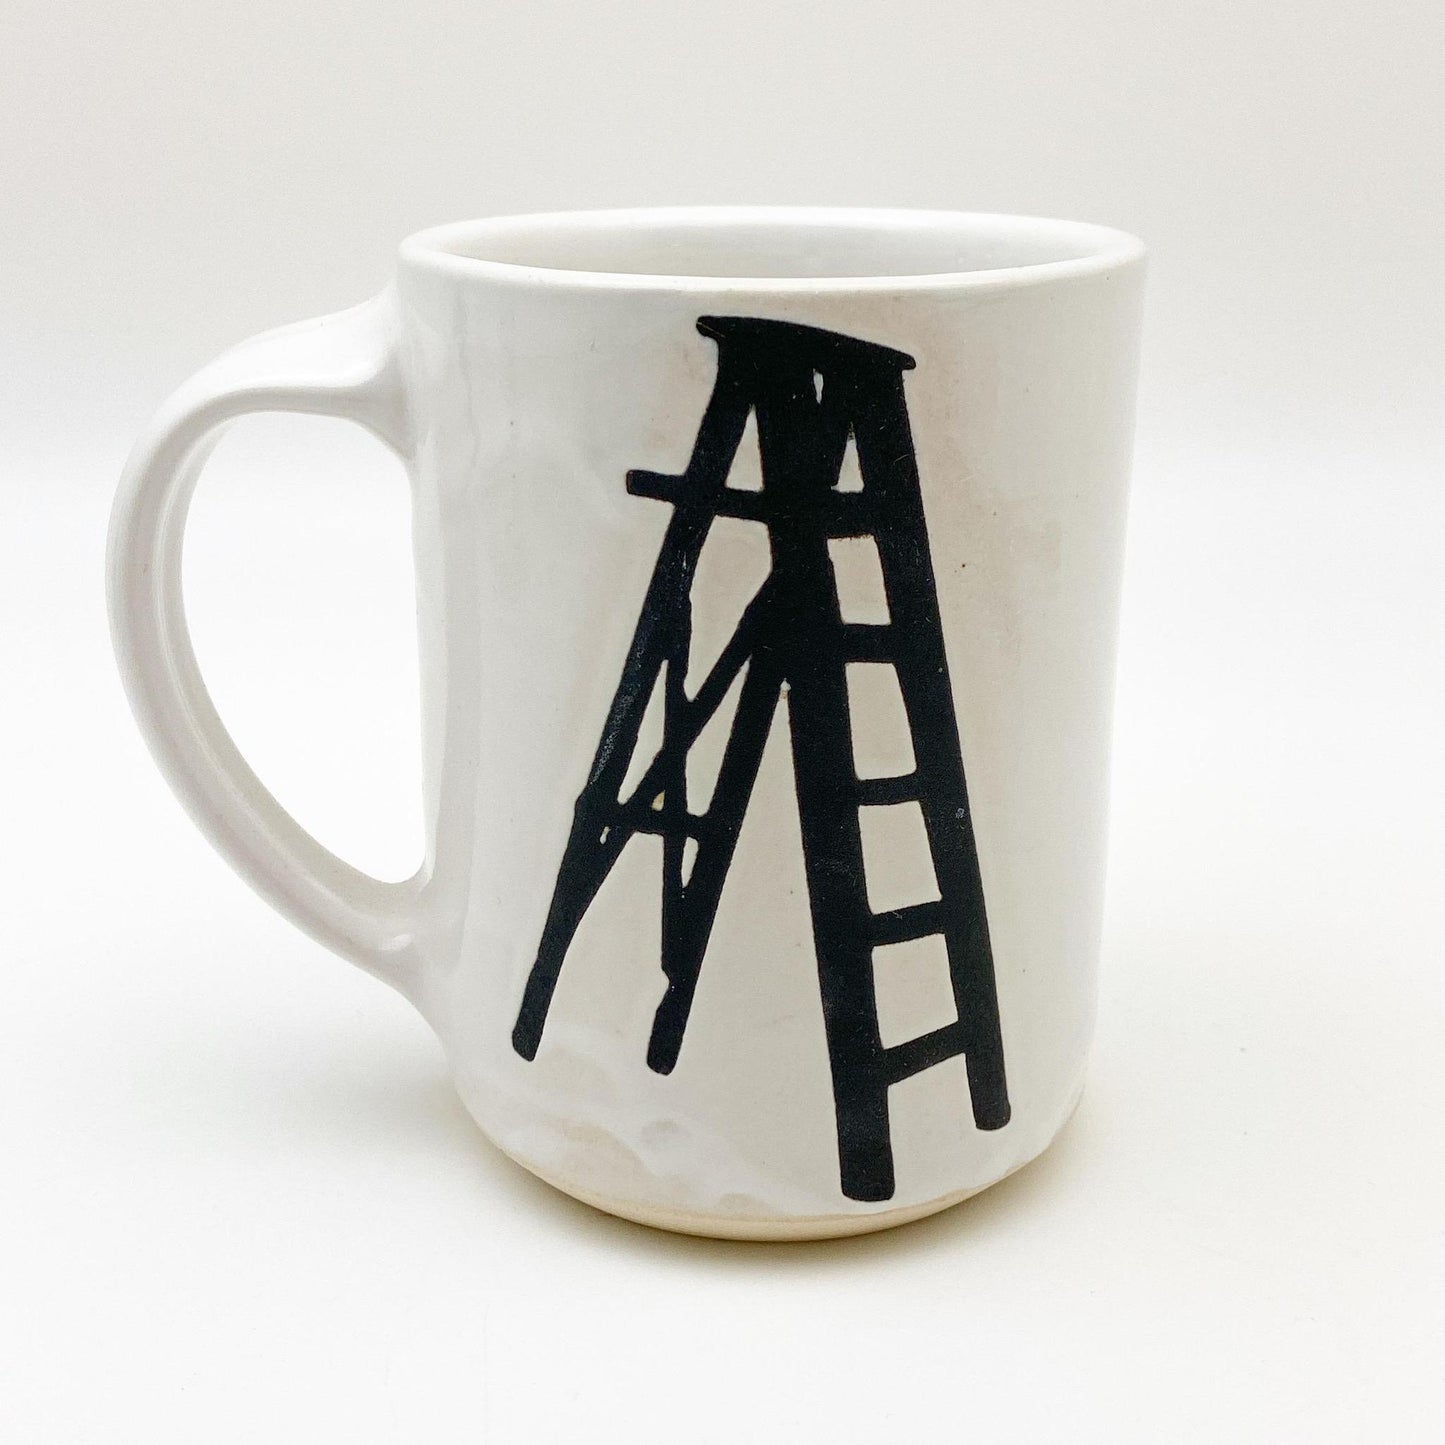 Mug - Black & White Ceramic - Ladder